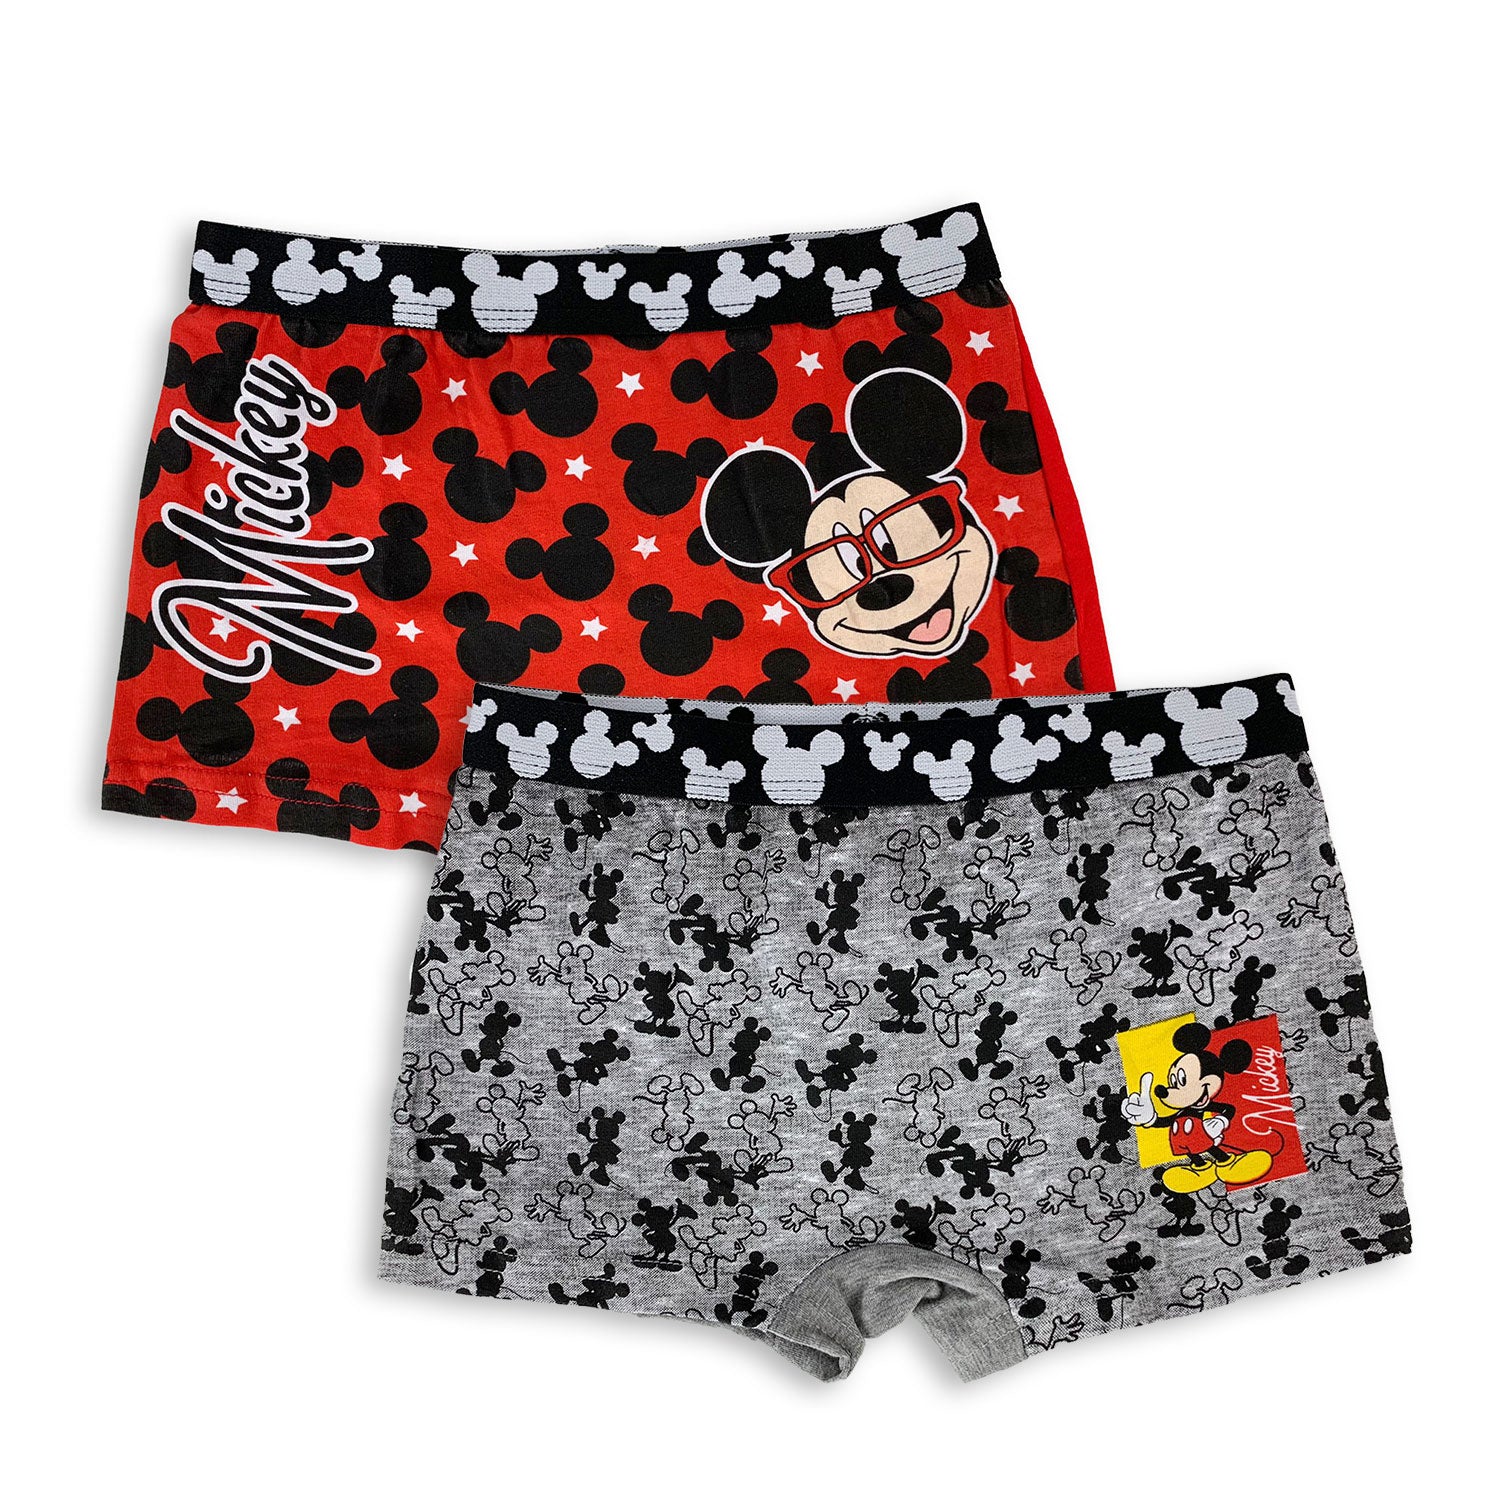 Set 2 Boxer Disney Mickey Mouse ufficiale bambino shorties mutandine intimo 4657